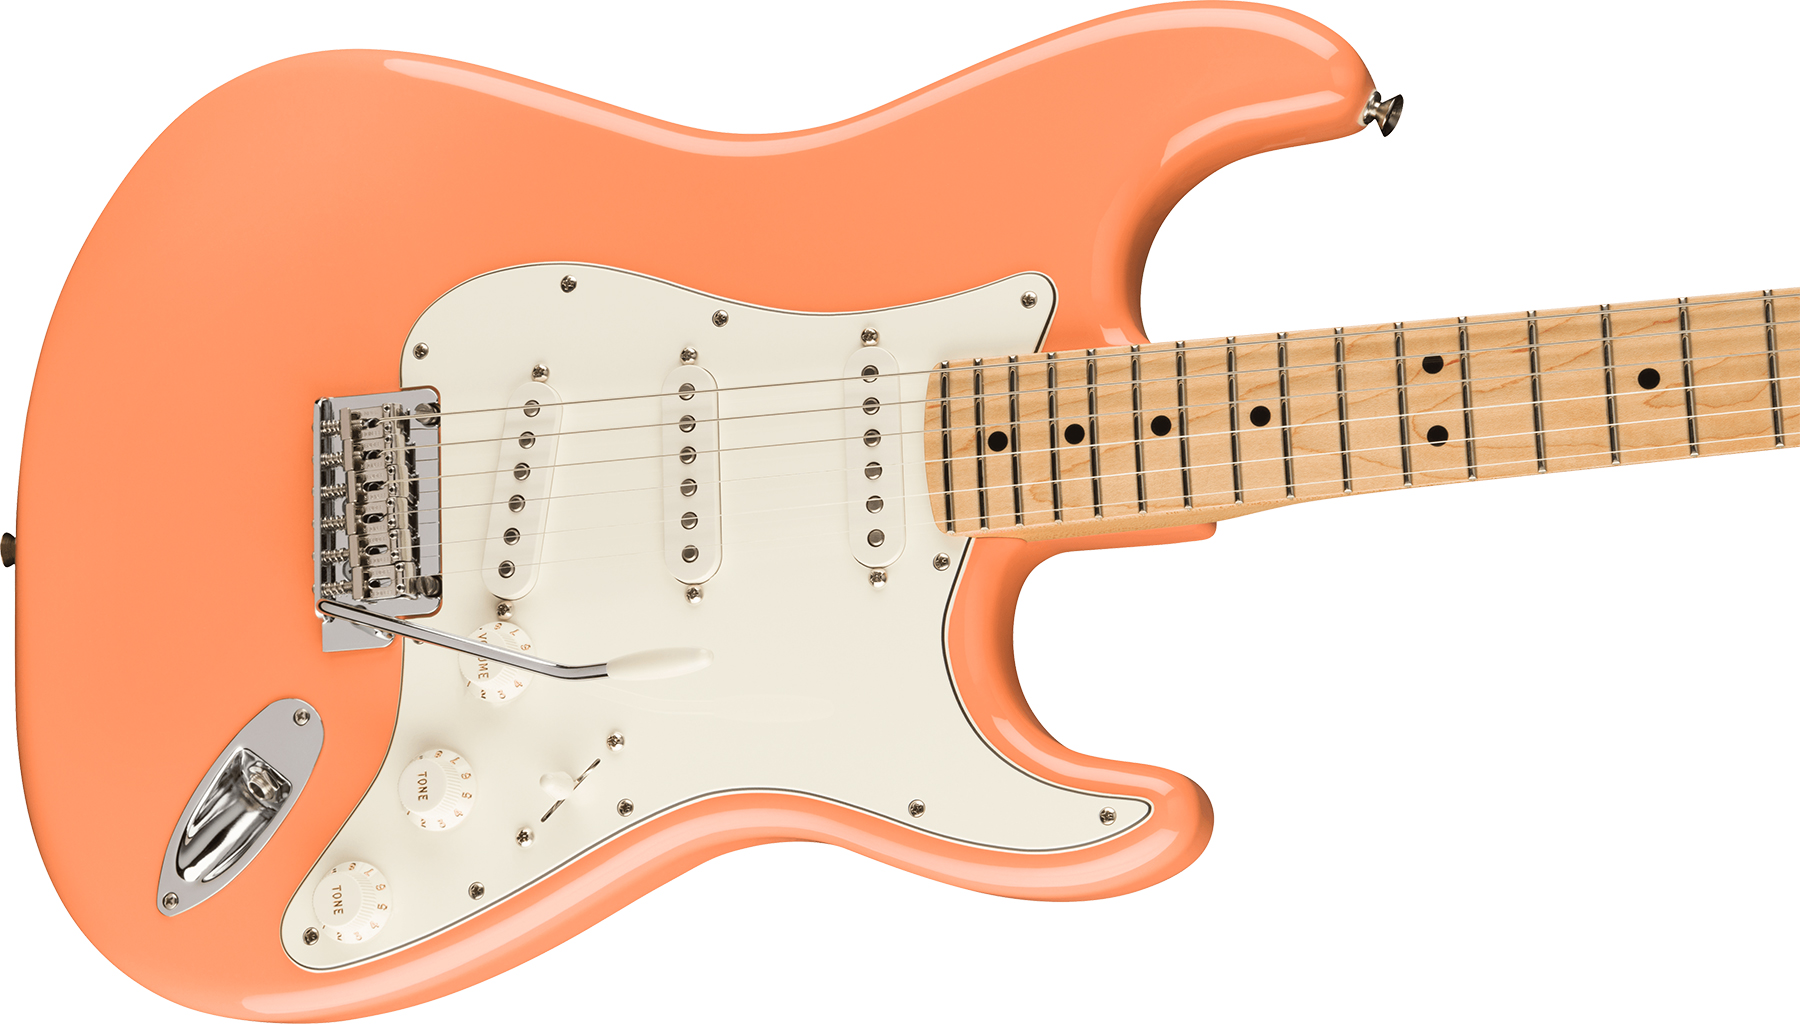 Fender Strat Player Ltd Mex 3s Trem Mn - Pacific Peach - E-Gitarre in Str-Form - Variation 2